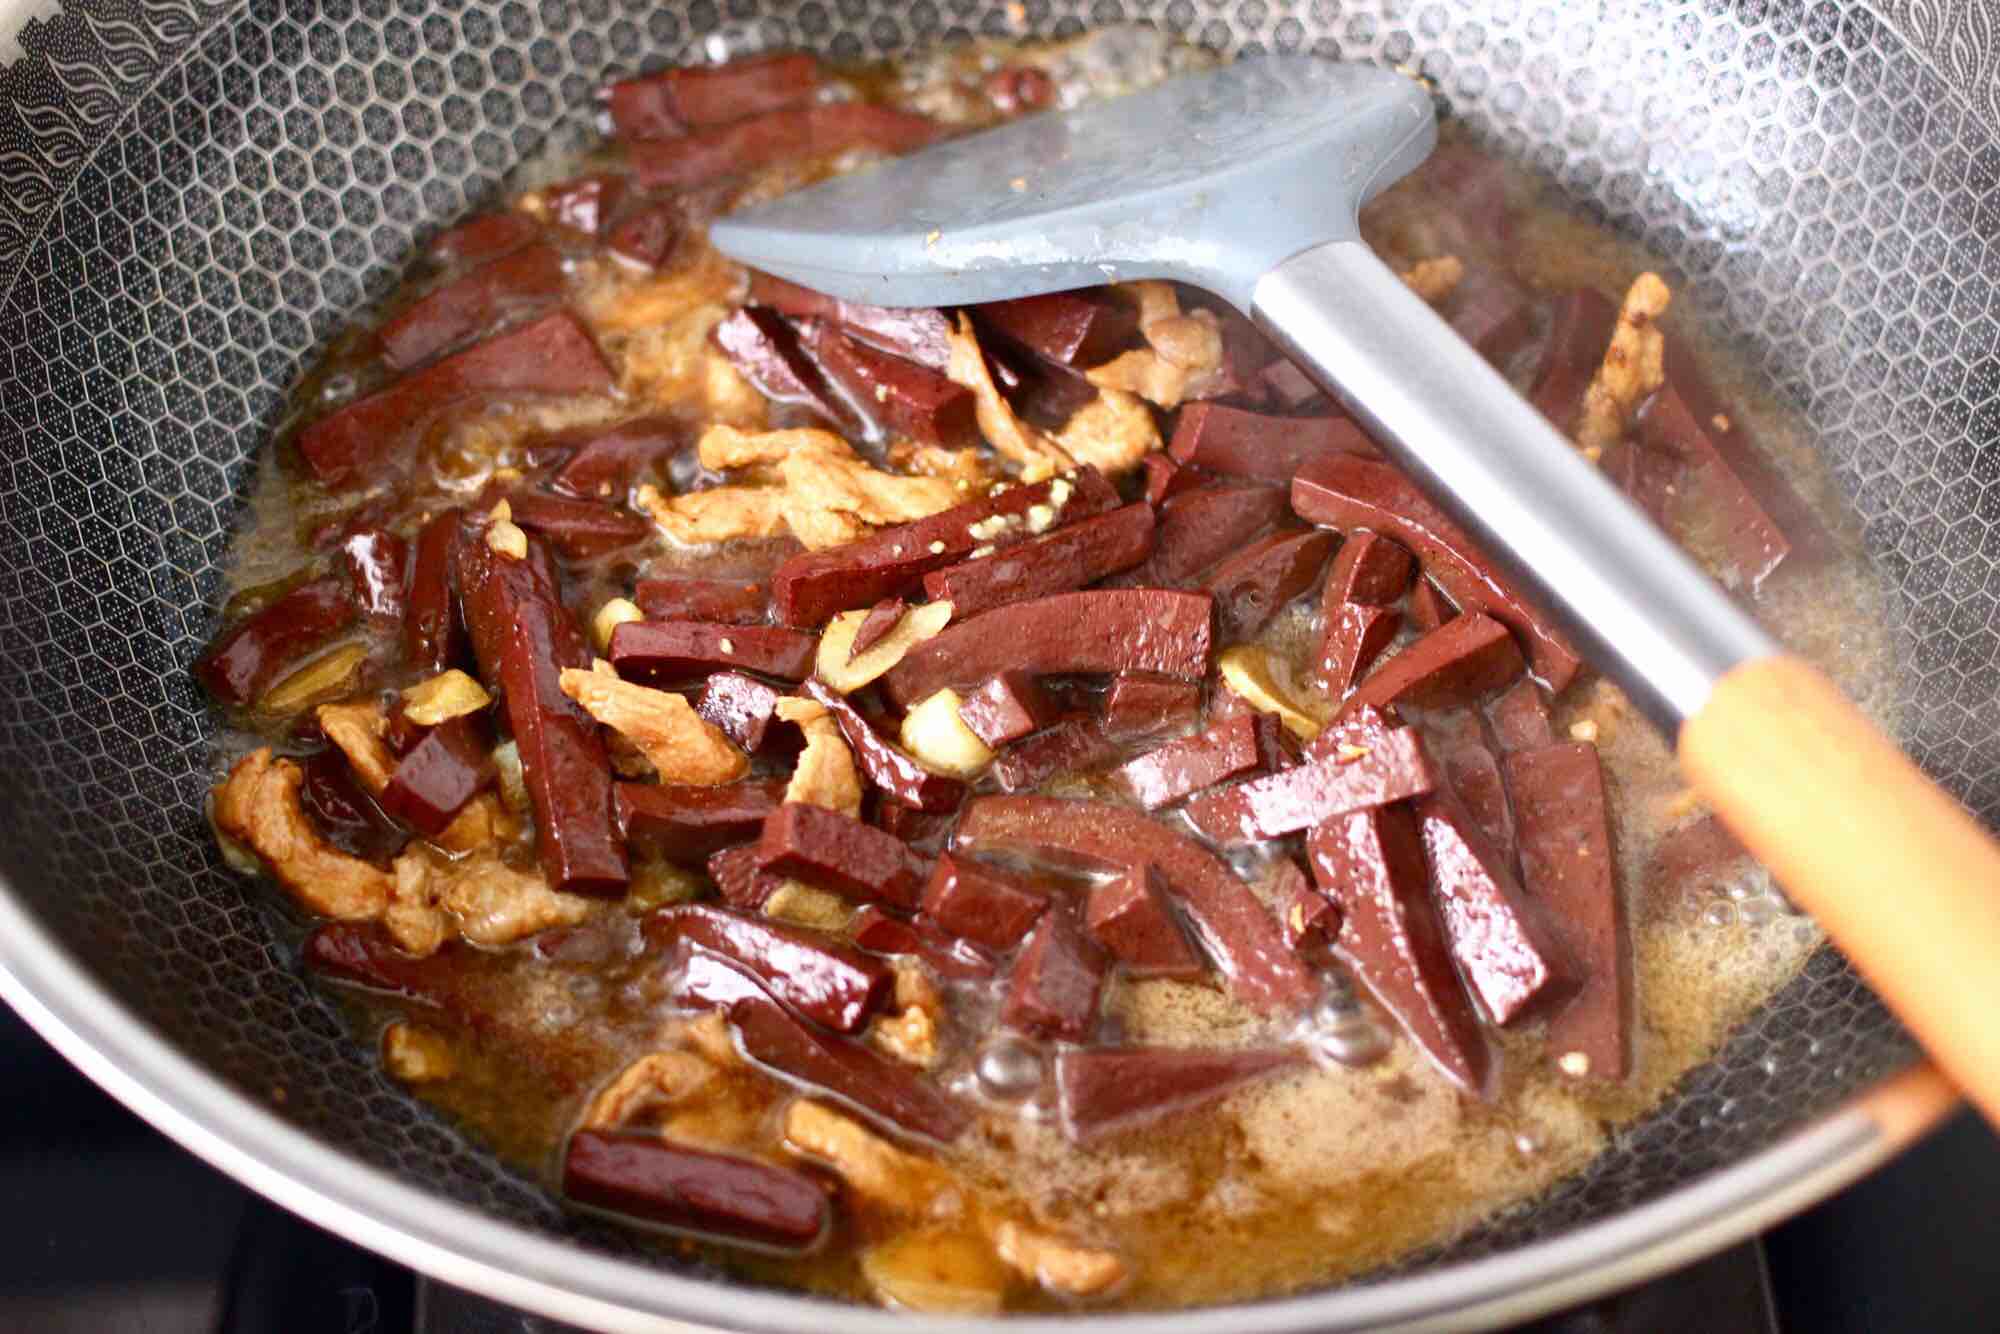 Stir-fried Pork Blood with Garlic Plum Pork recipe